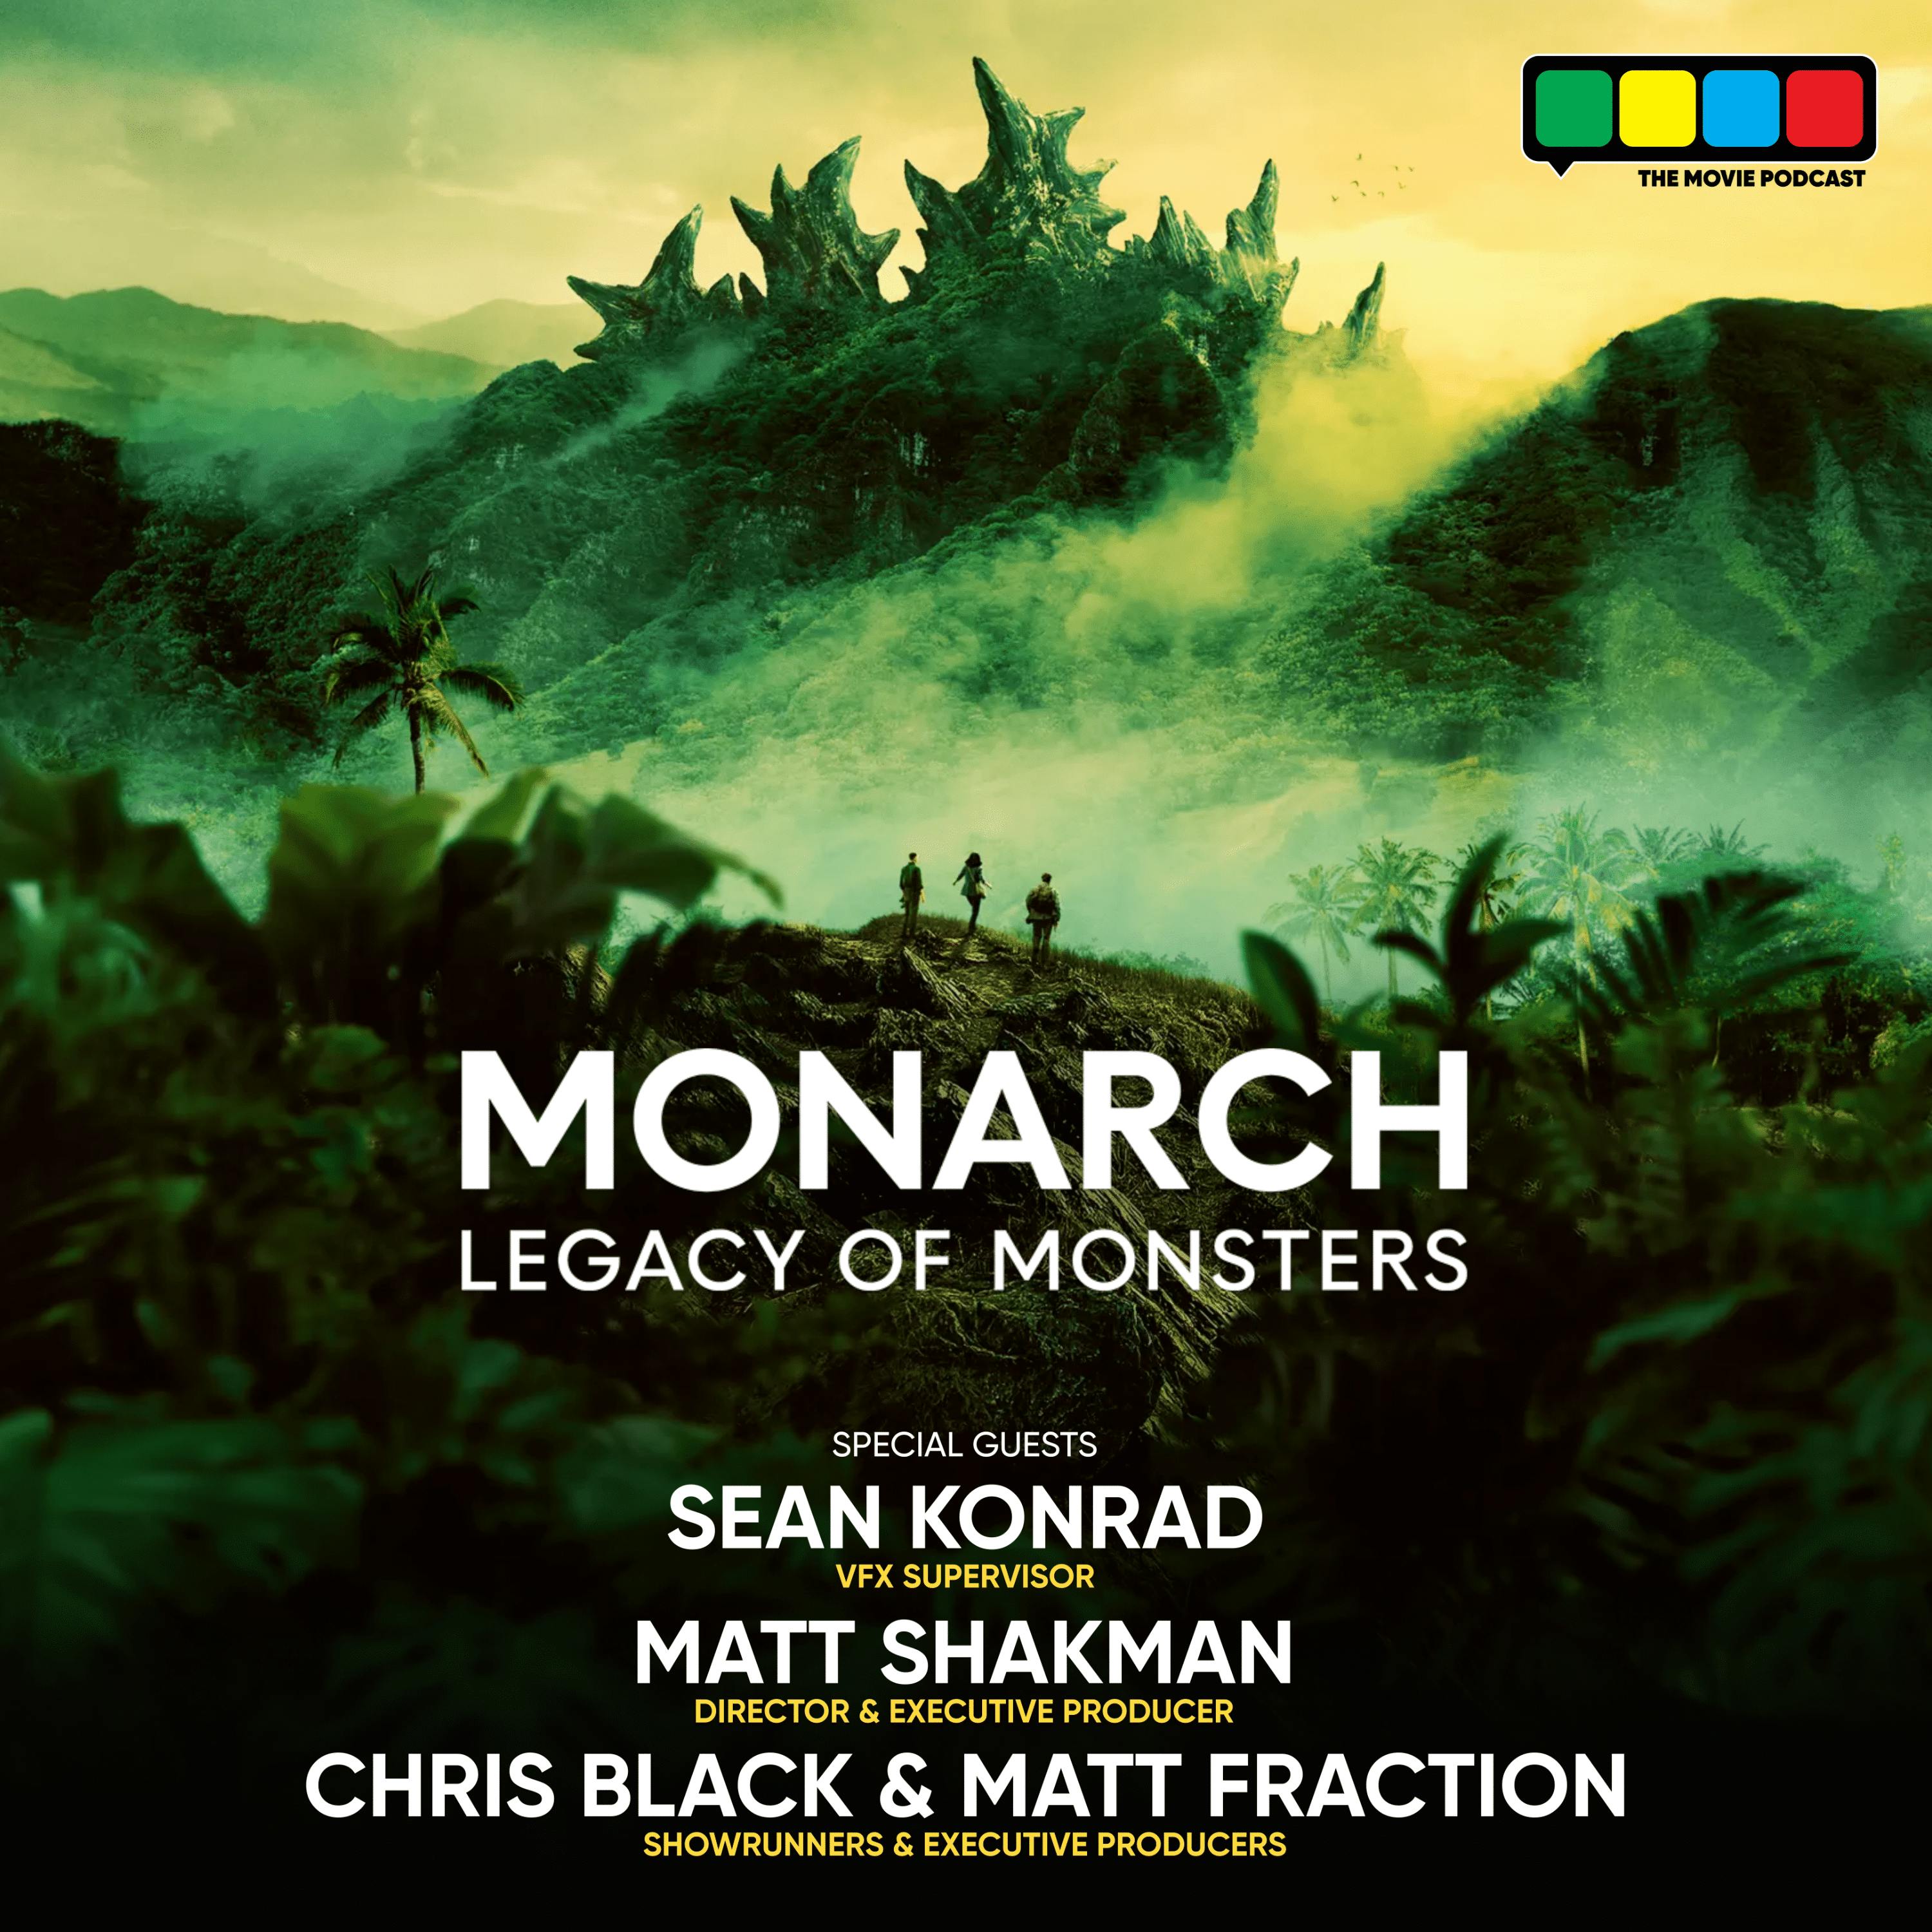 Monarch: Legacy of Monsters Interview with Matt Shakman (Director & Executive Producer), Chris Black & Matt Fraction (Showrunners and Executive Producers, and Sean Konrad (VFX Supervisor) - Apple TV+